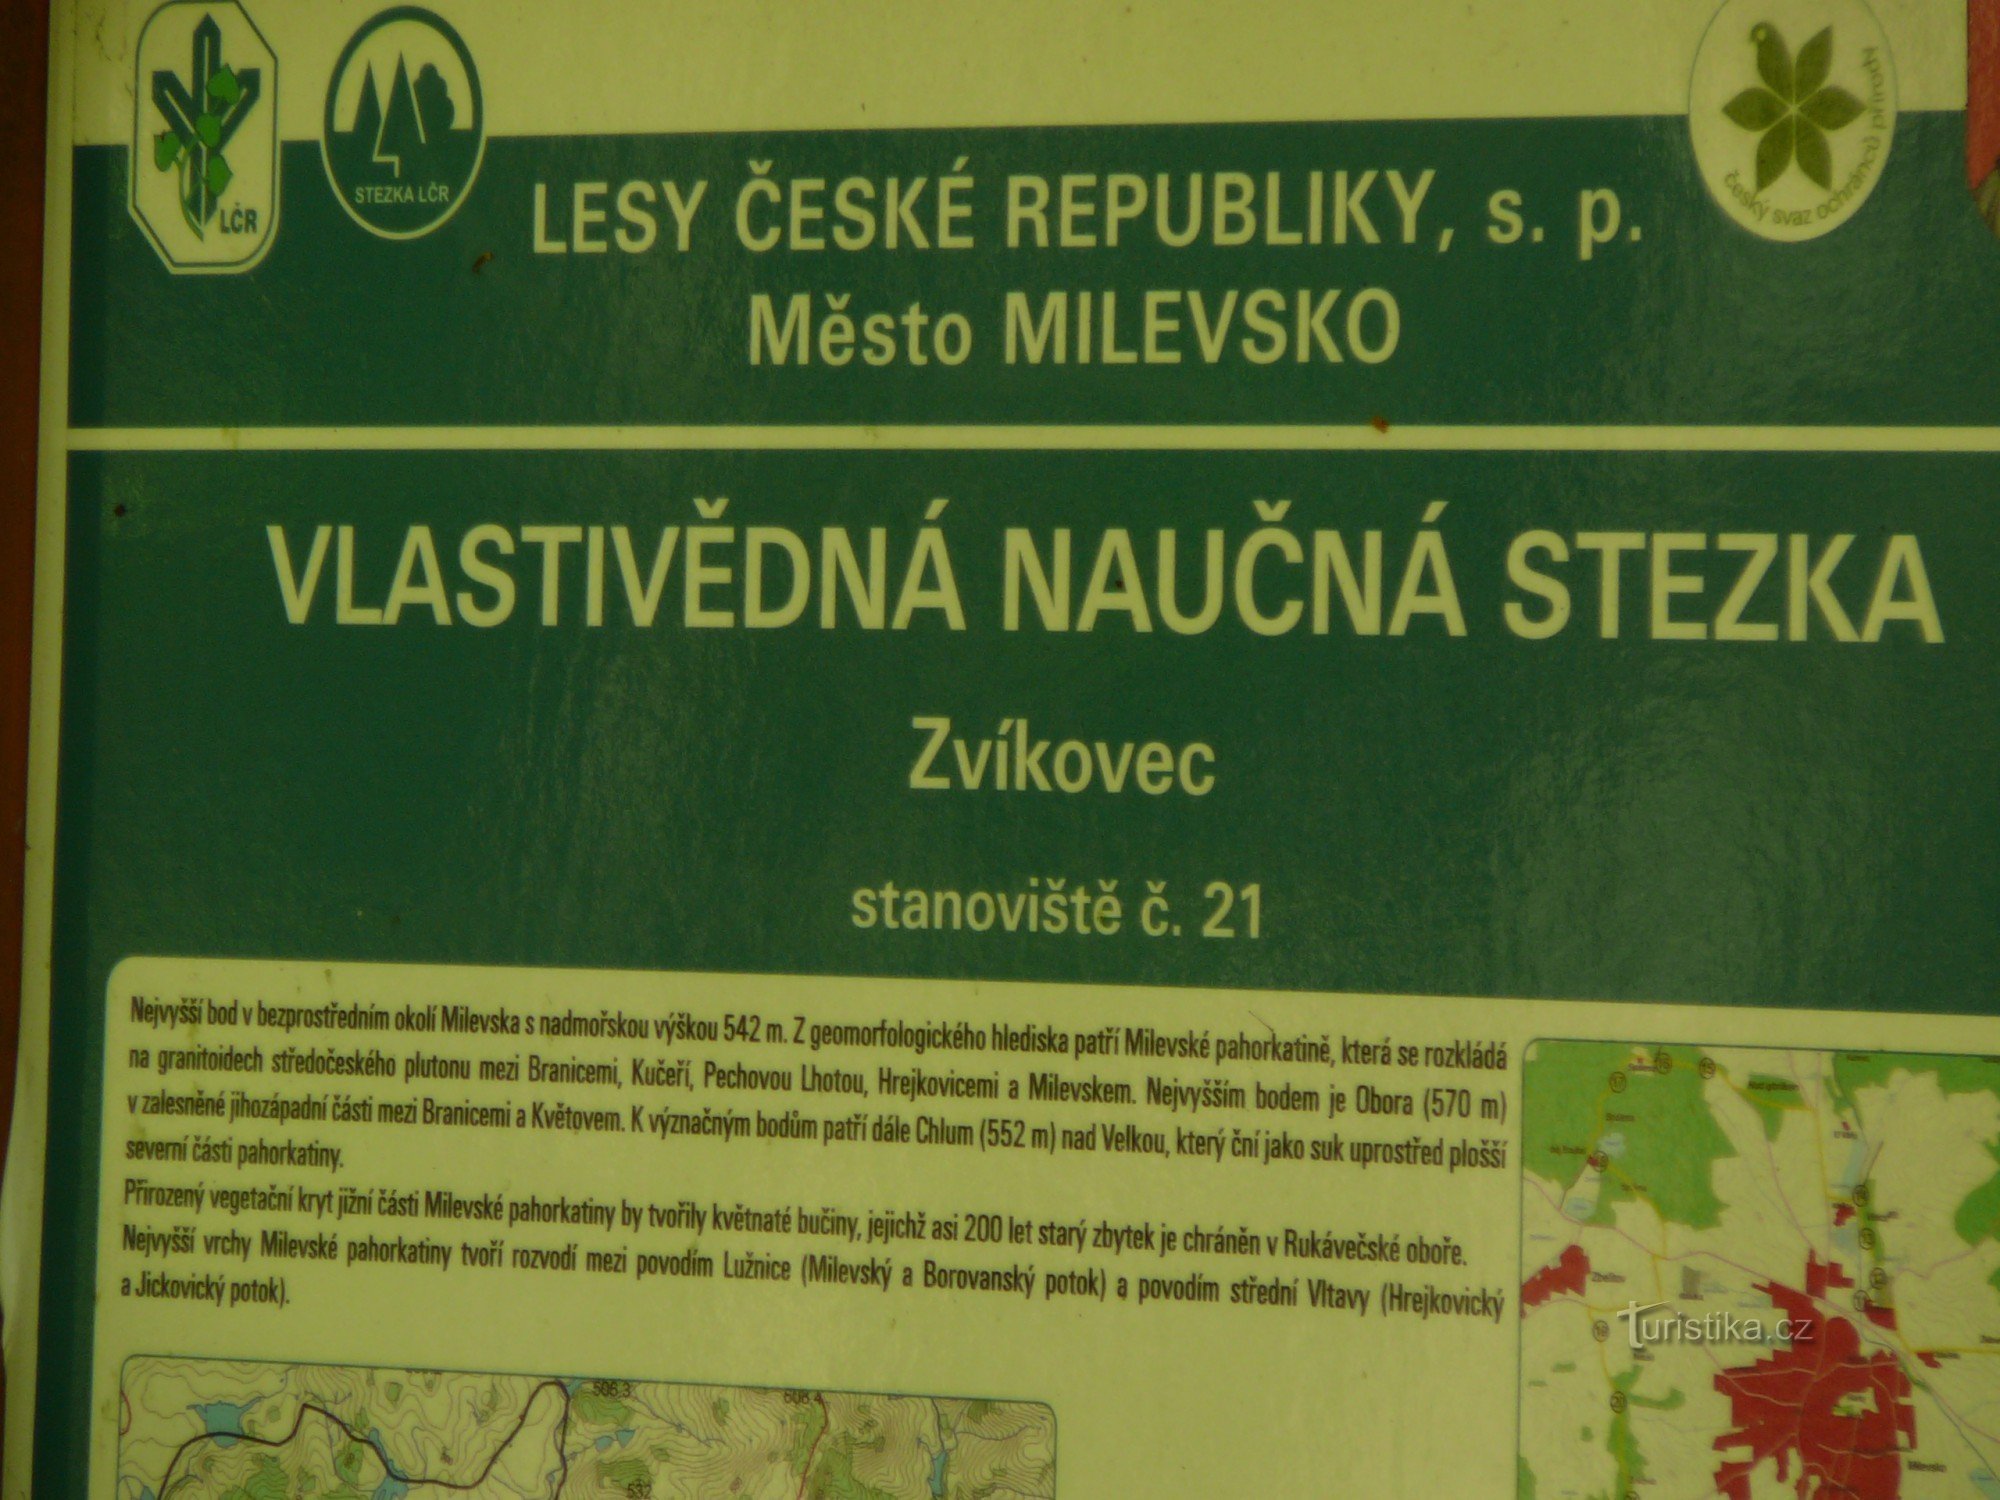 An educational trail leads through Zvíkovec